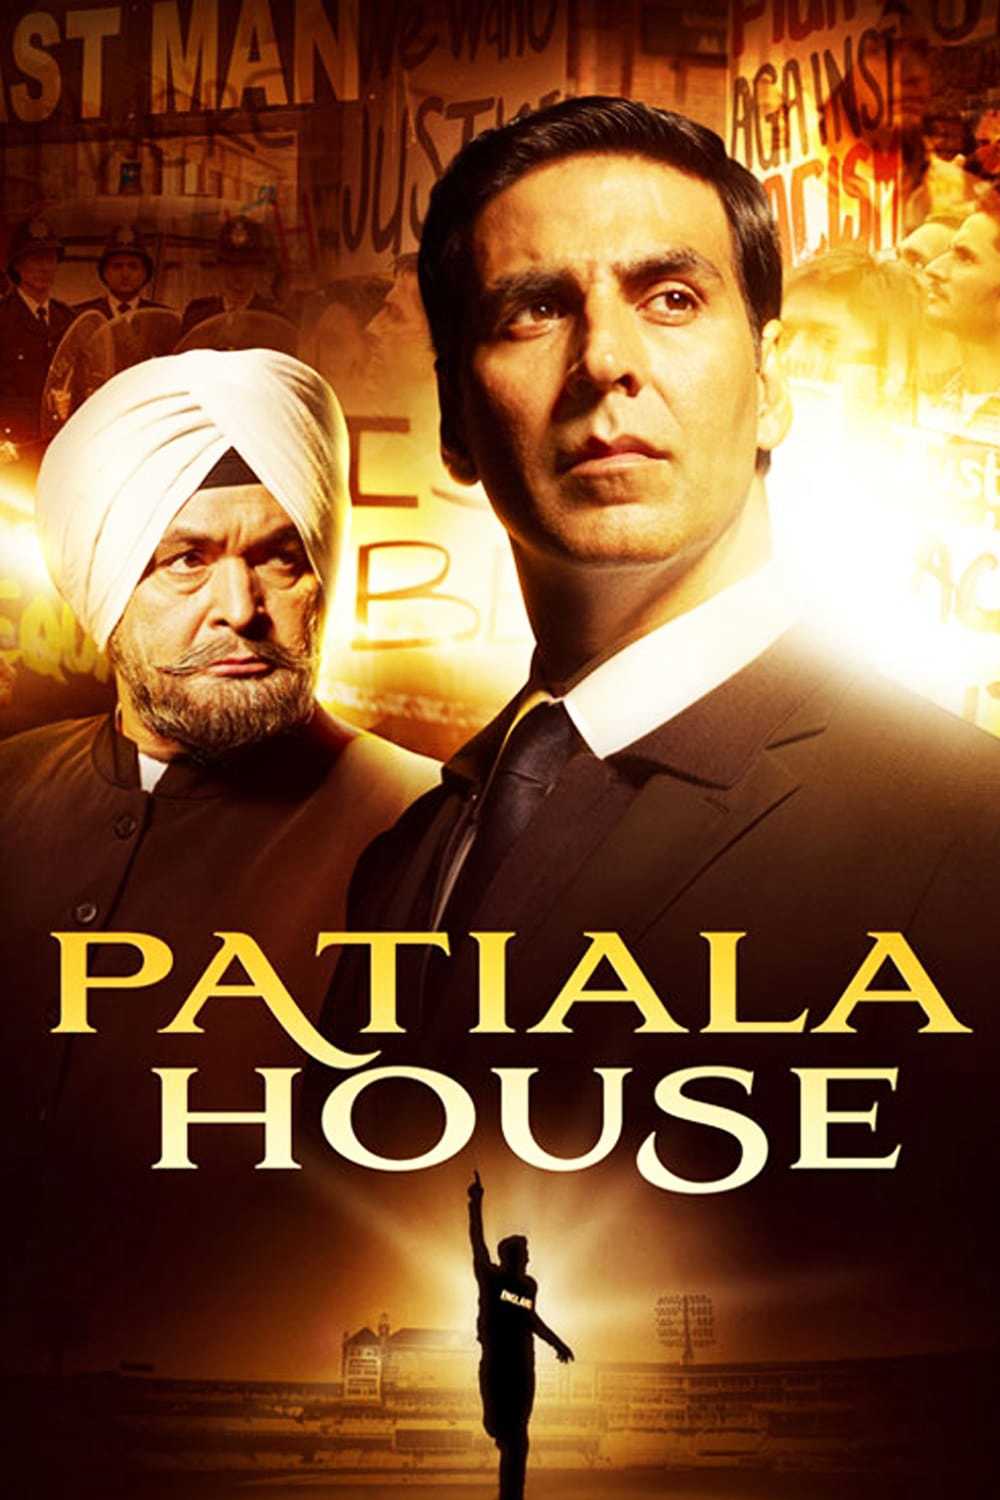 Patiala house - Patiala house